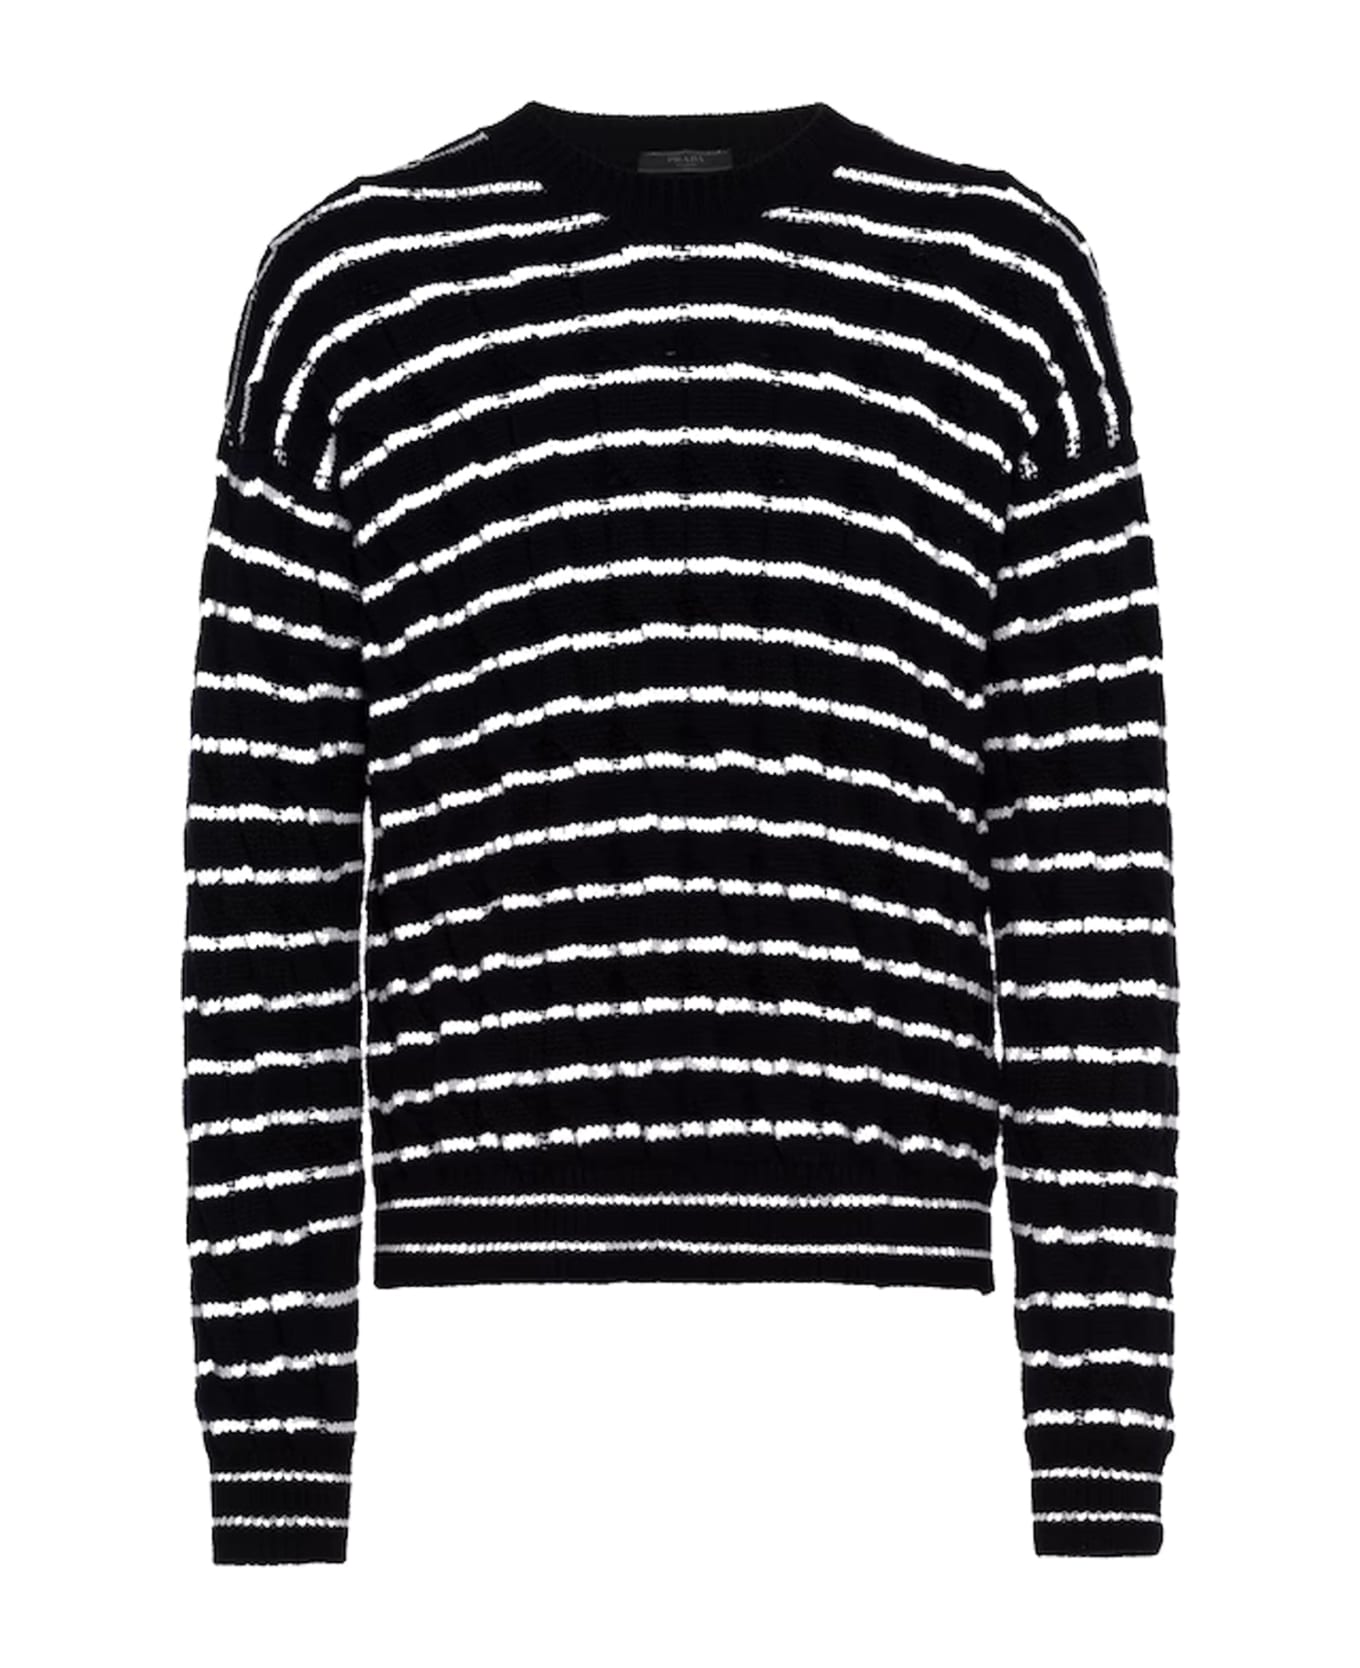 Prada Cashmere Sweater - Black